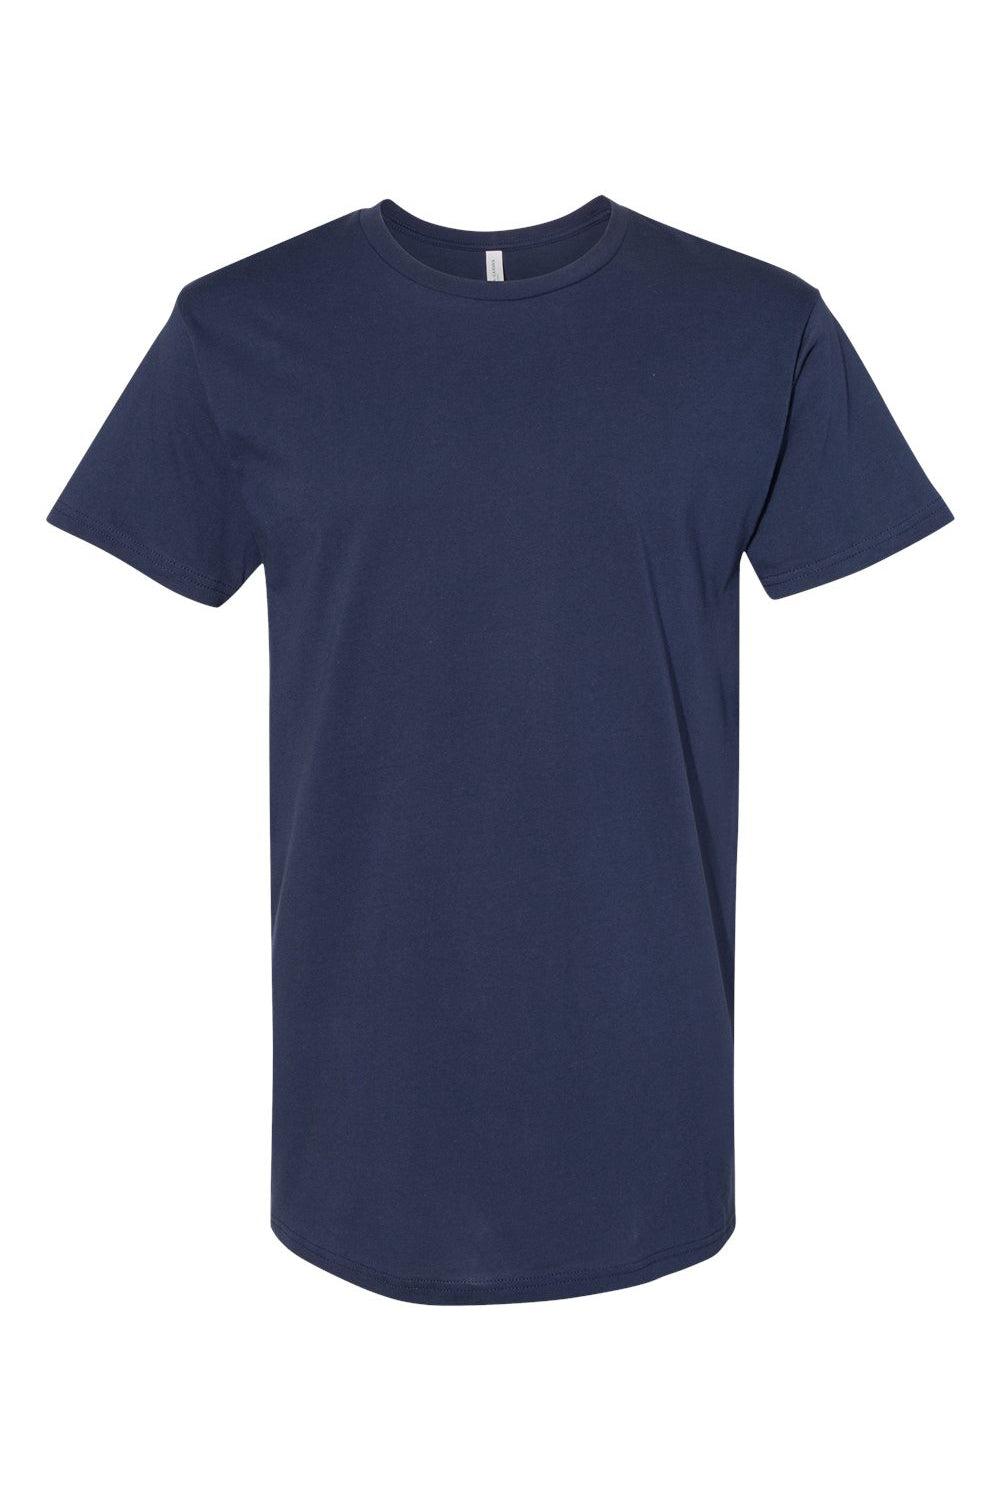 Bella + Canvas 3006 Mens Long Body Urban Short Sleeve Crewneck T-Shirt Navy Blue Flat Front